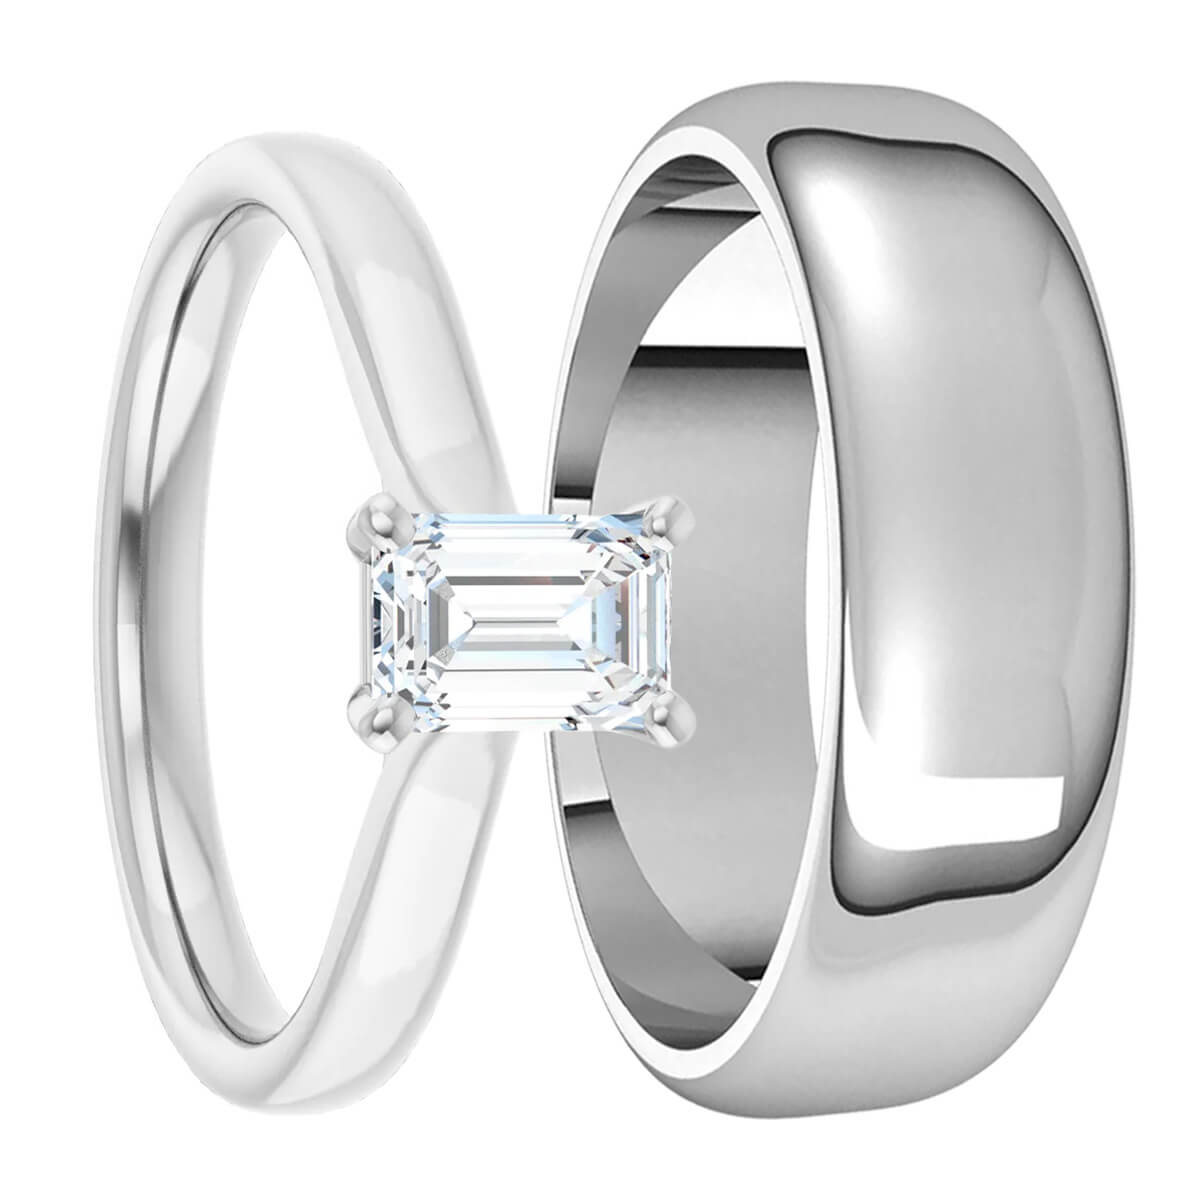 14k White Gold & Lab-Created Emerald-Cut Diamond Couple's Matching Wedding Band Set